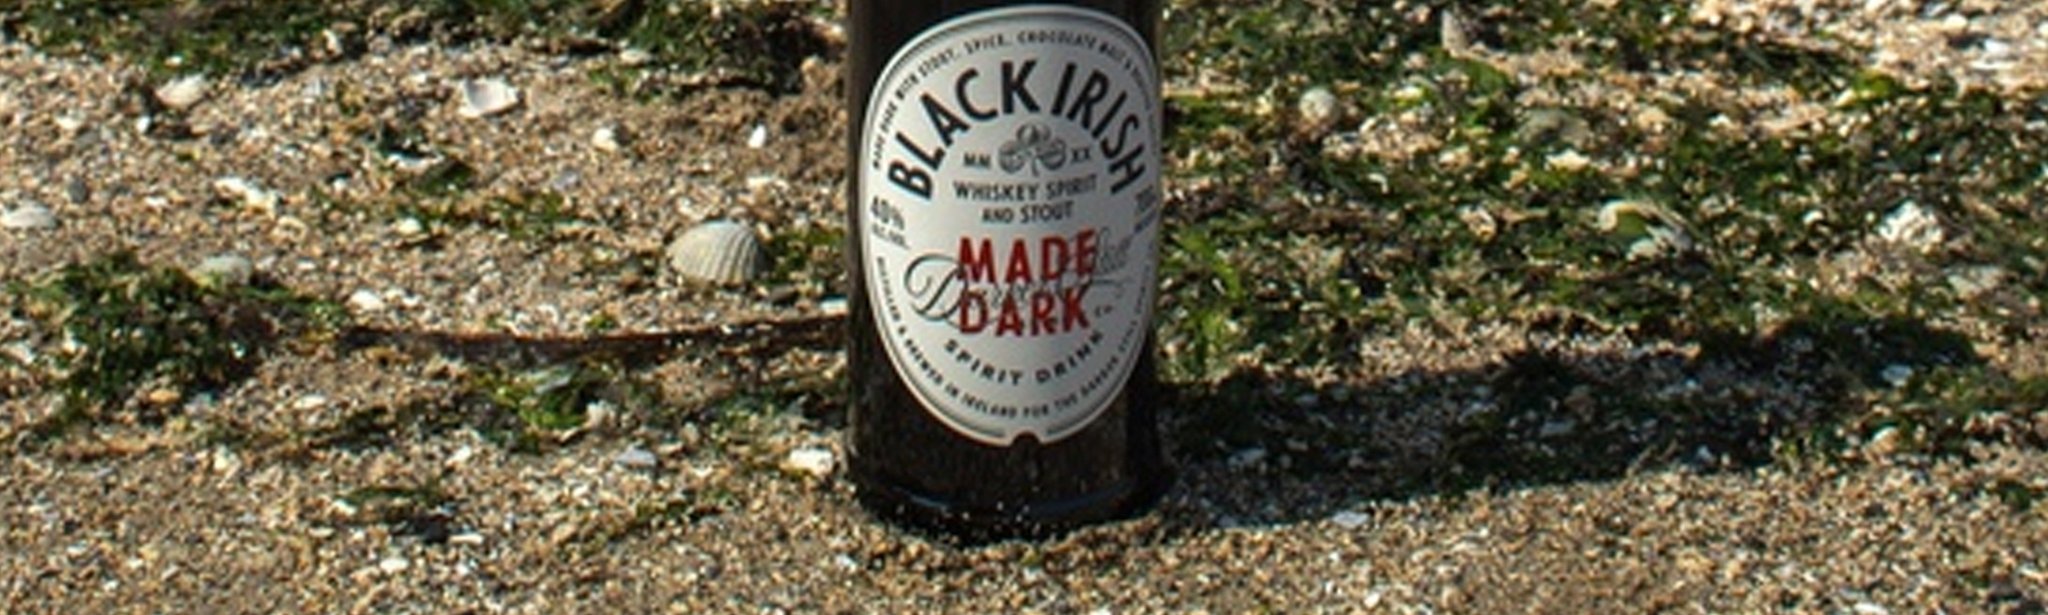 Black Irish - The Bottle Club